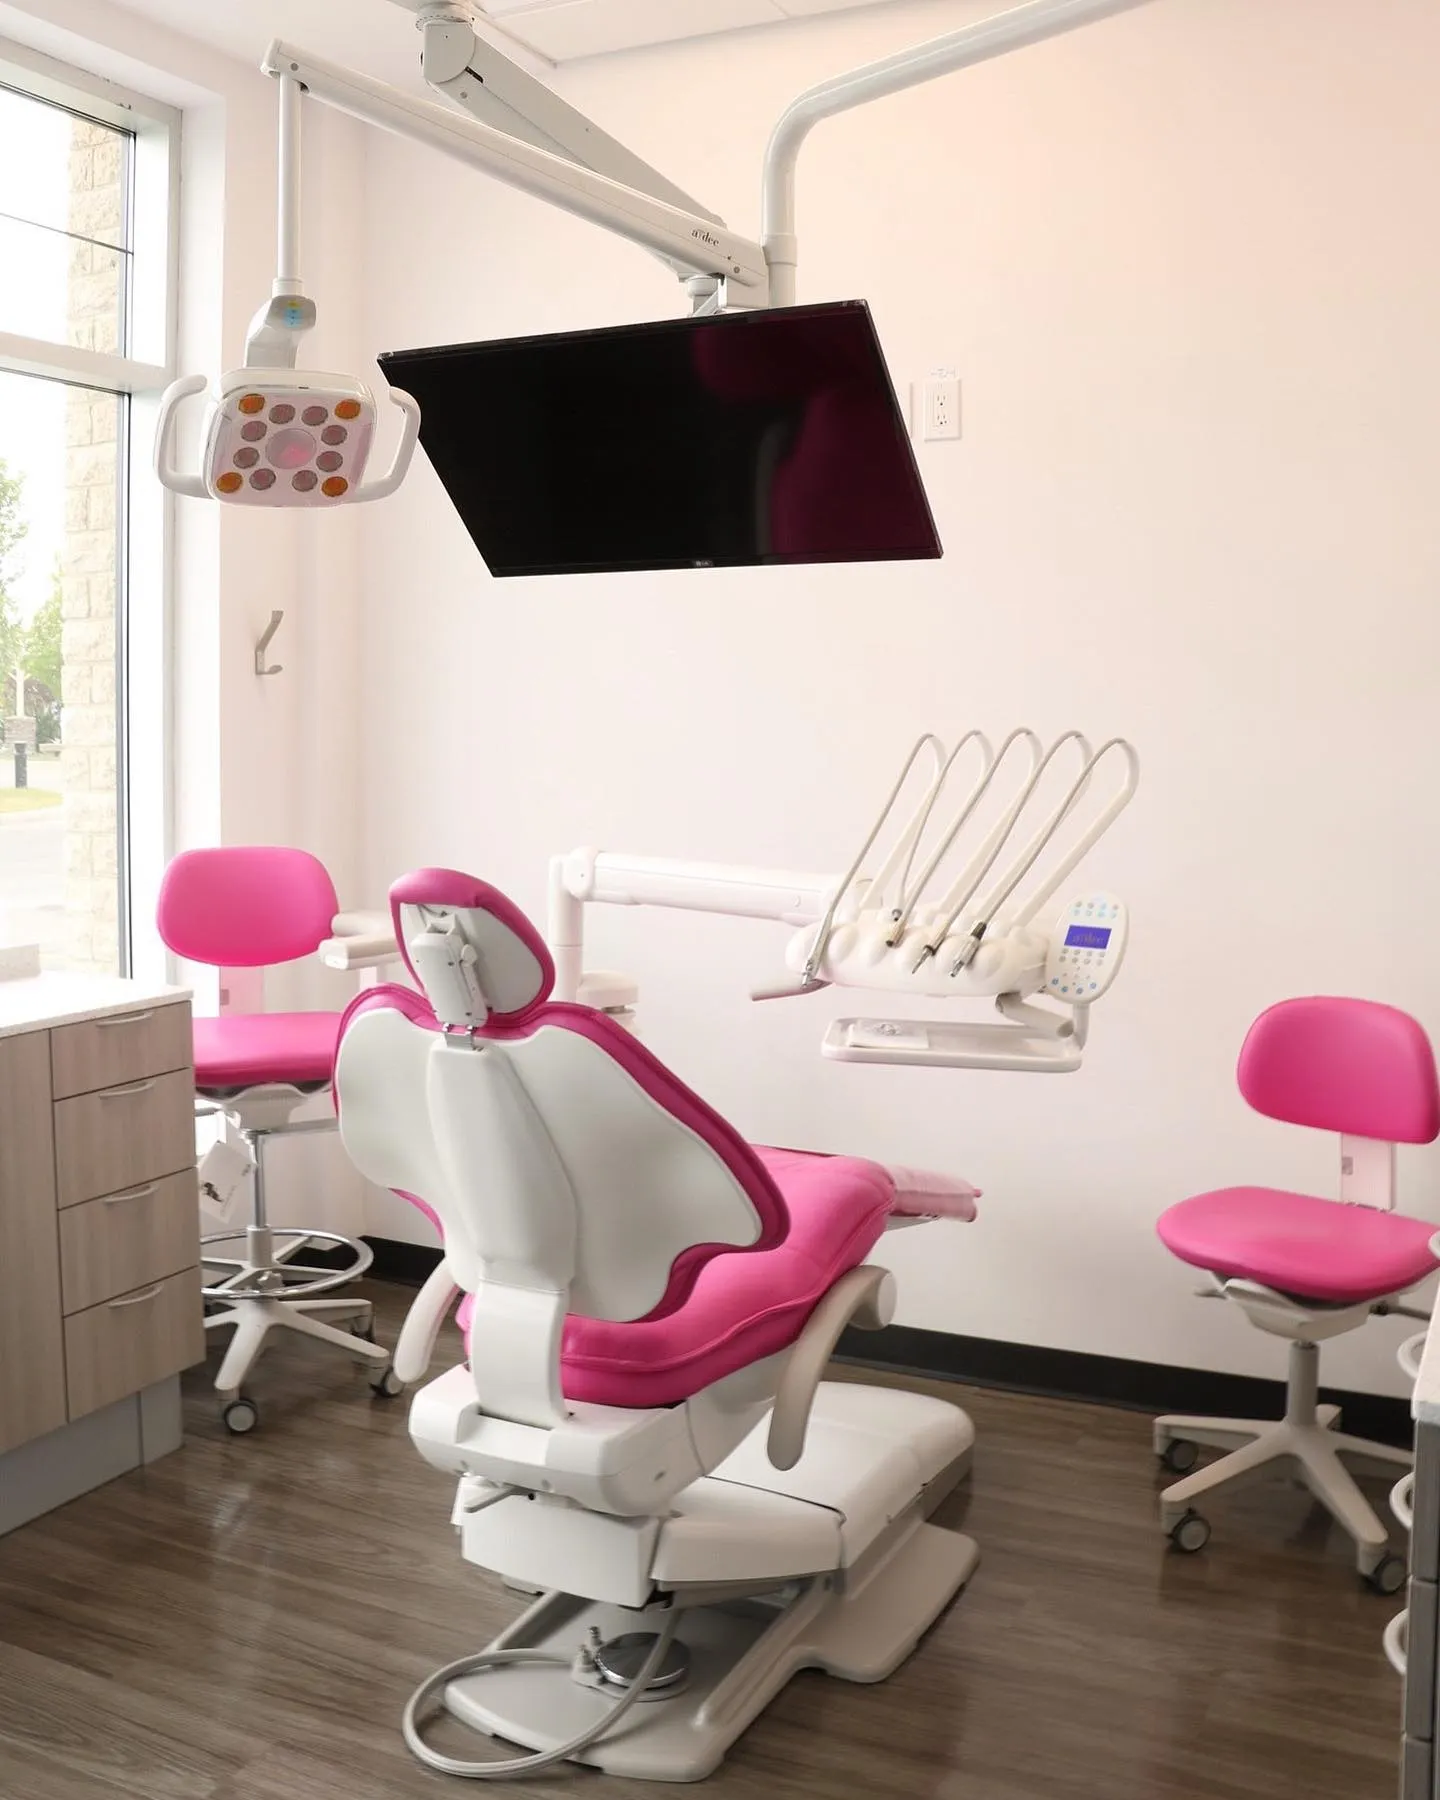 Dental Technology bridlewood dental clinic